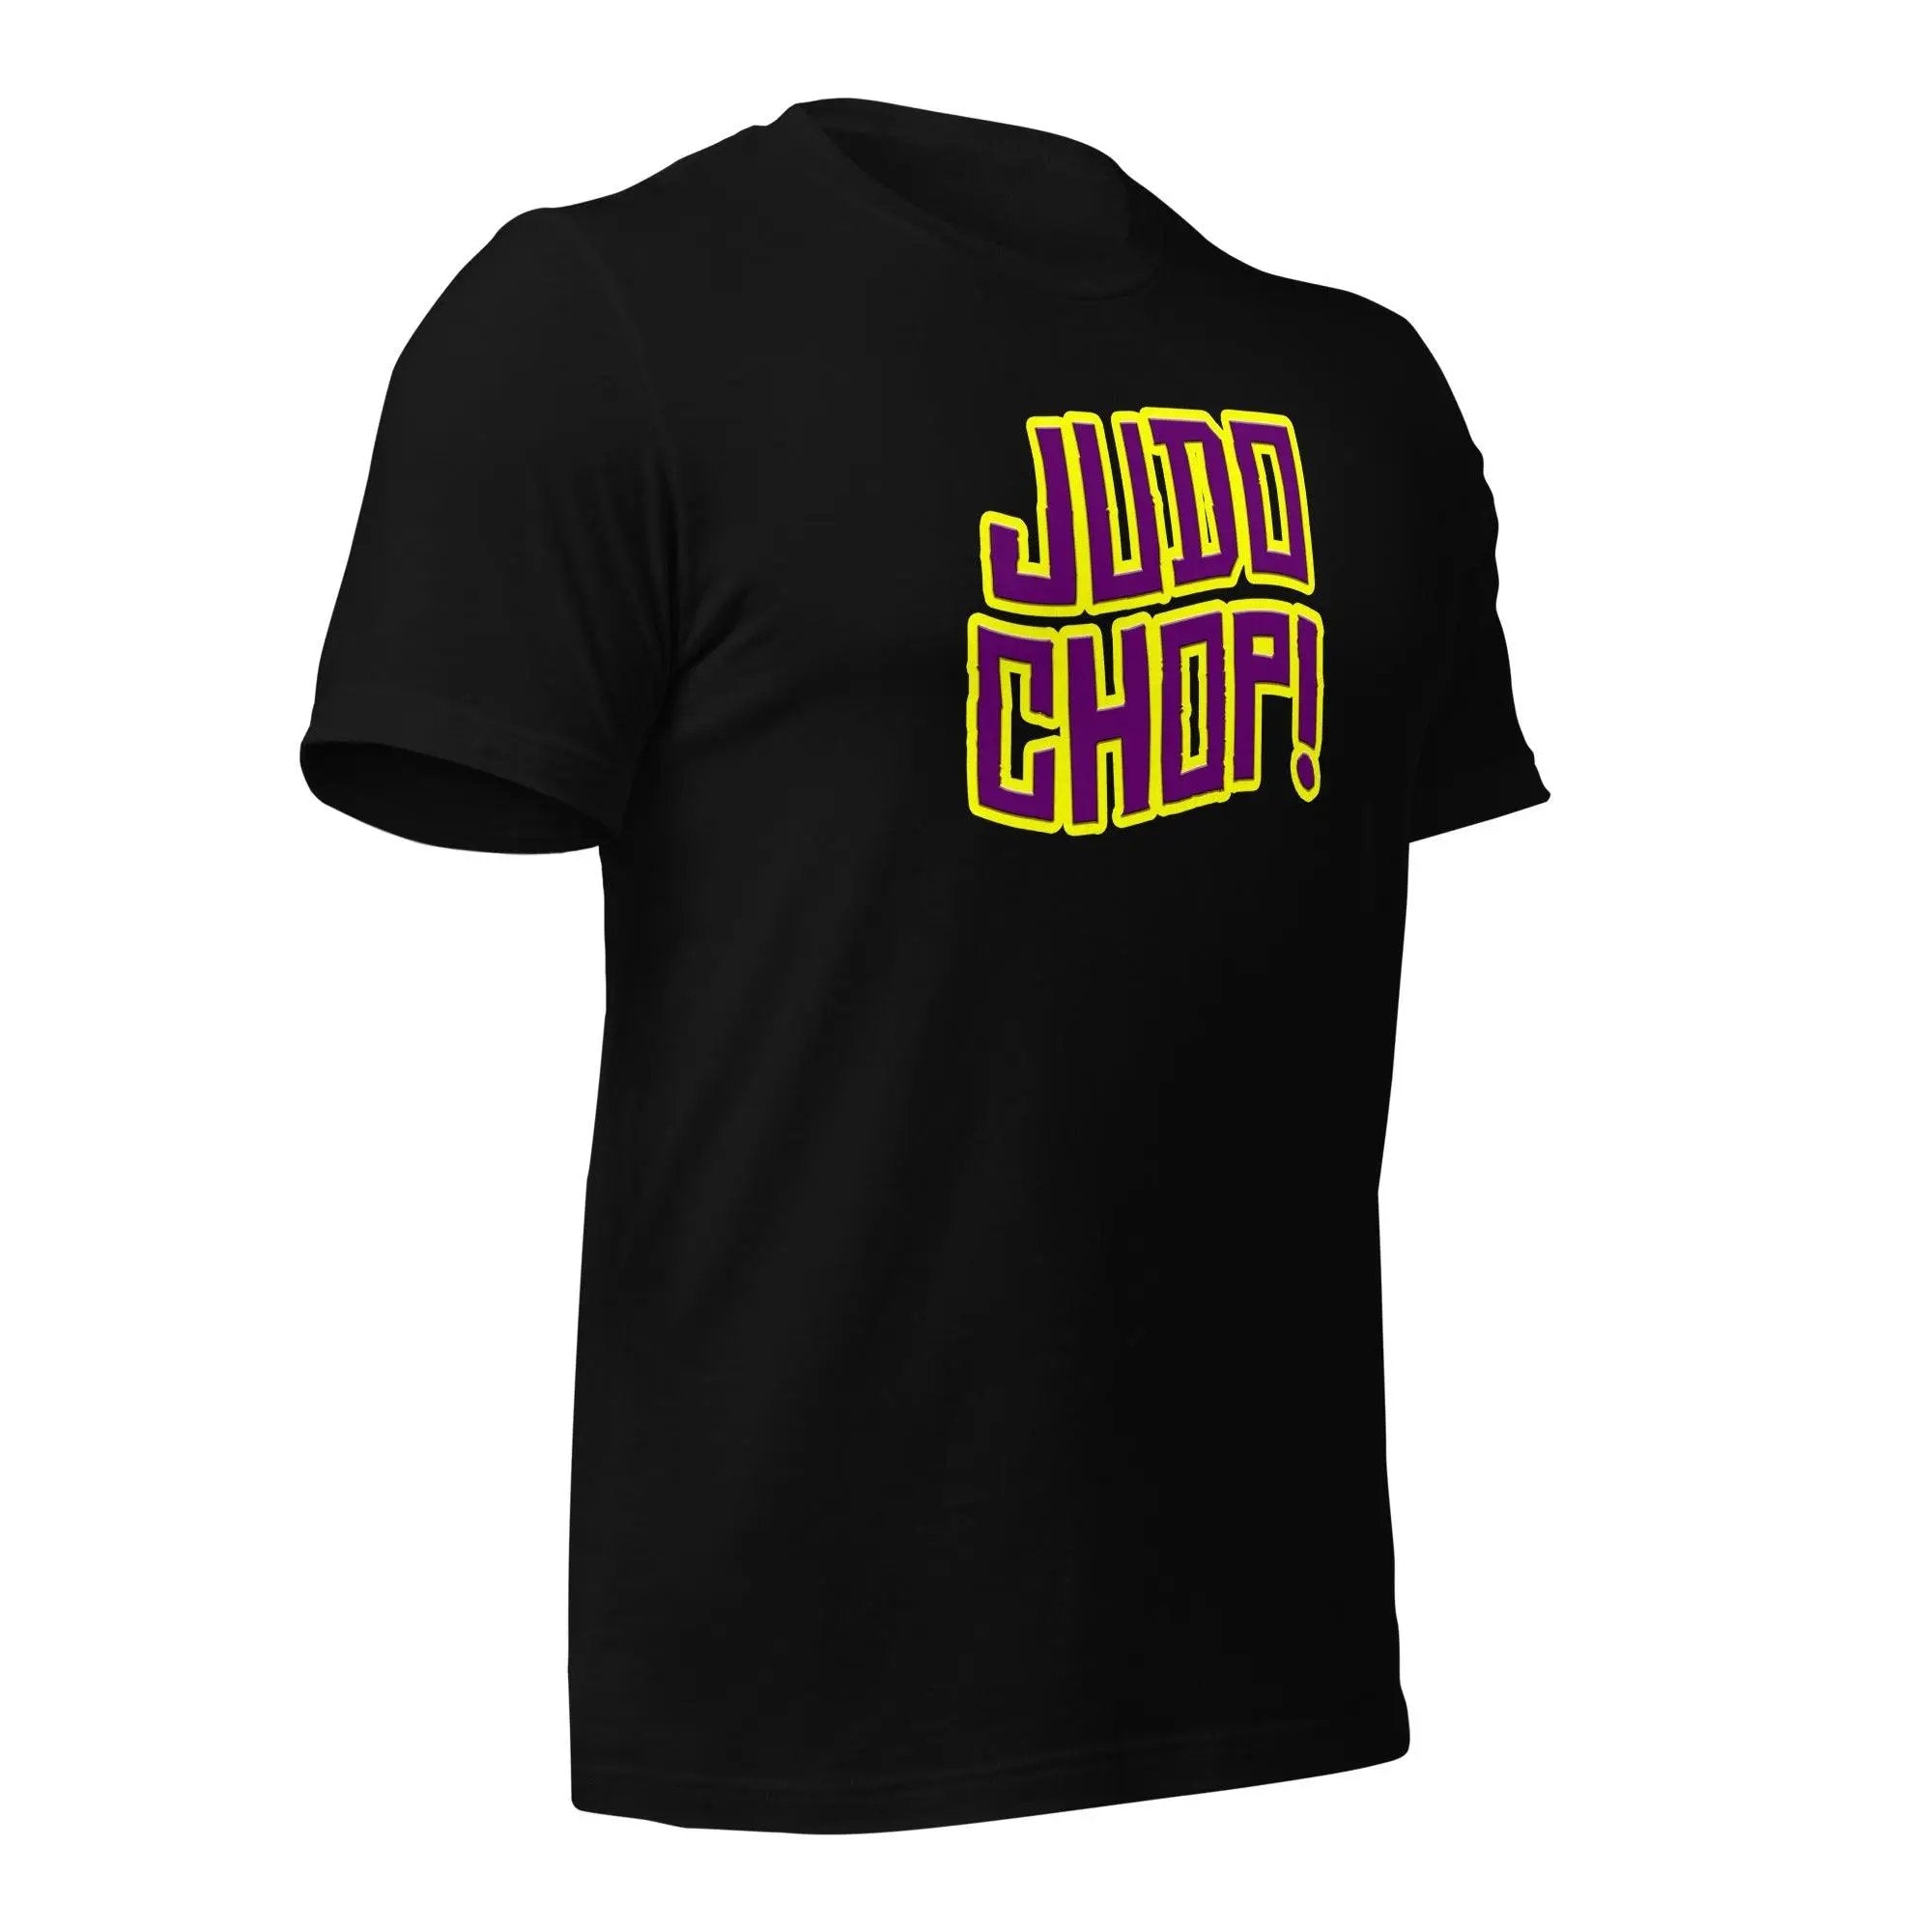 Judo Chop! Unisex t-shirt